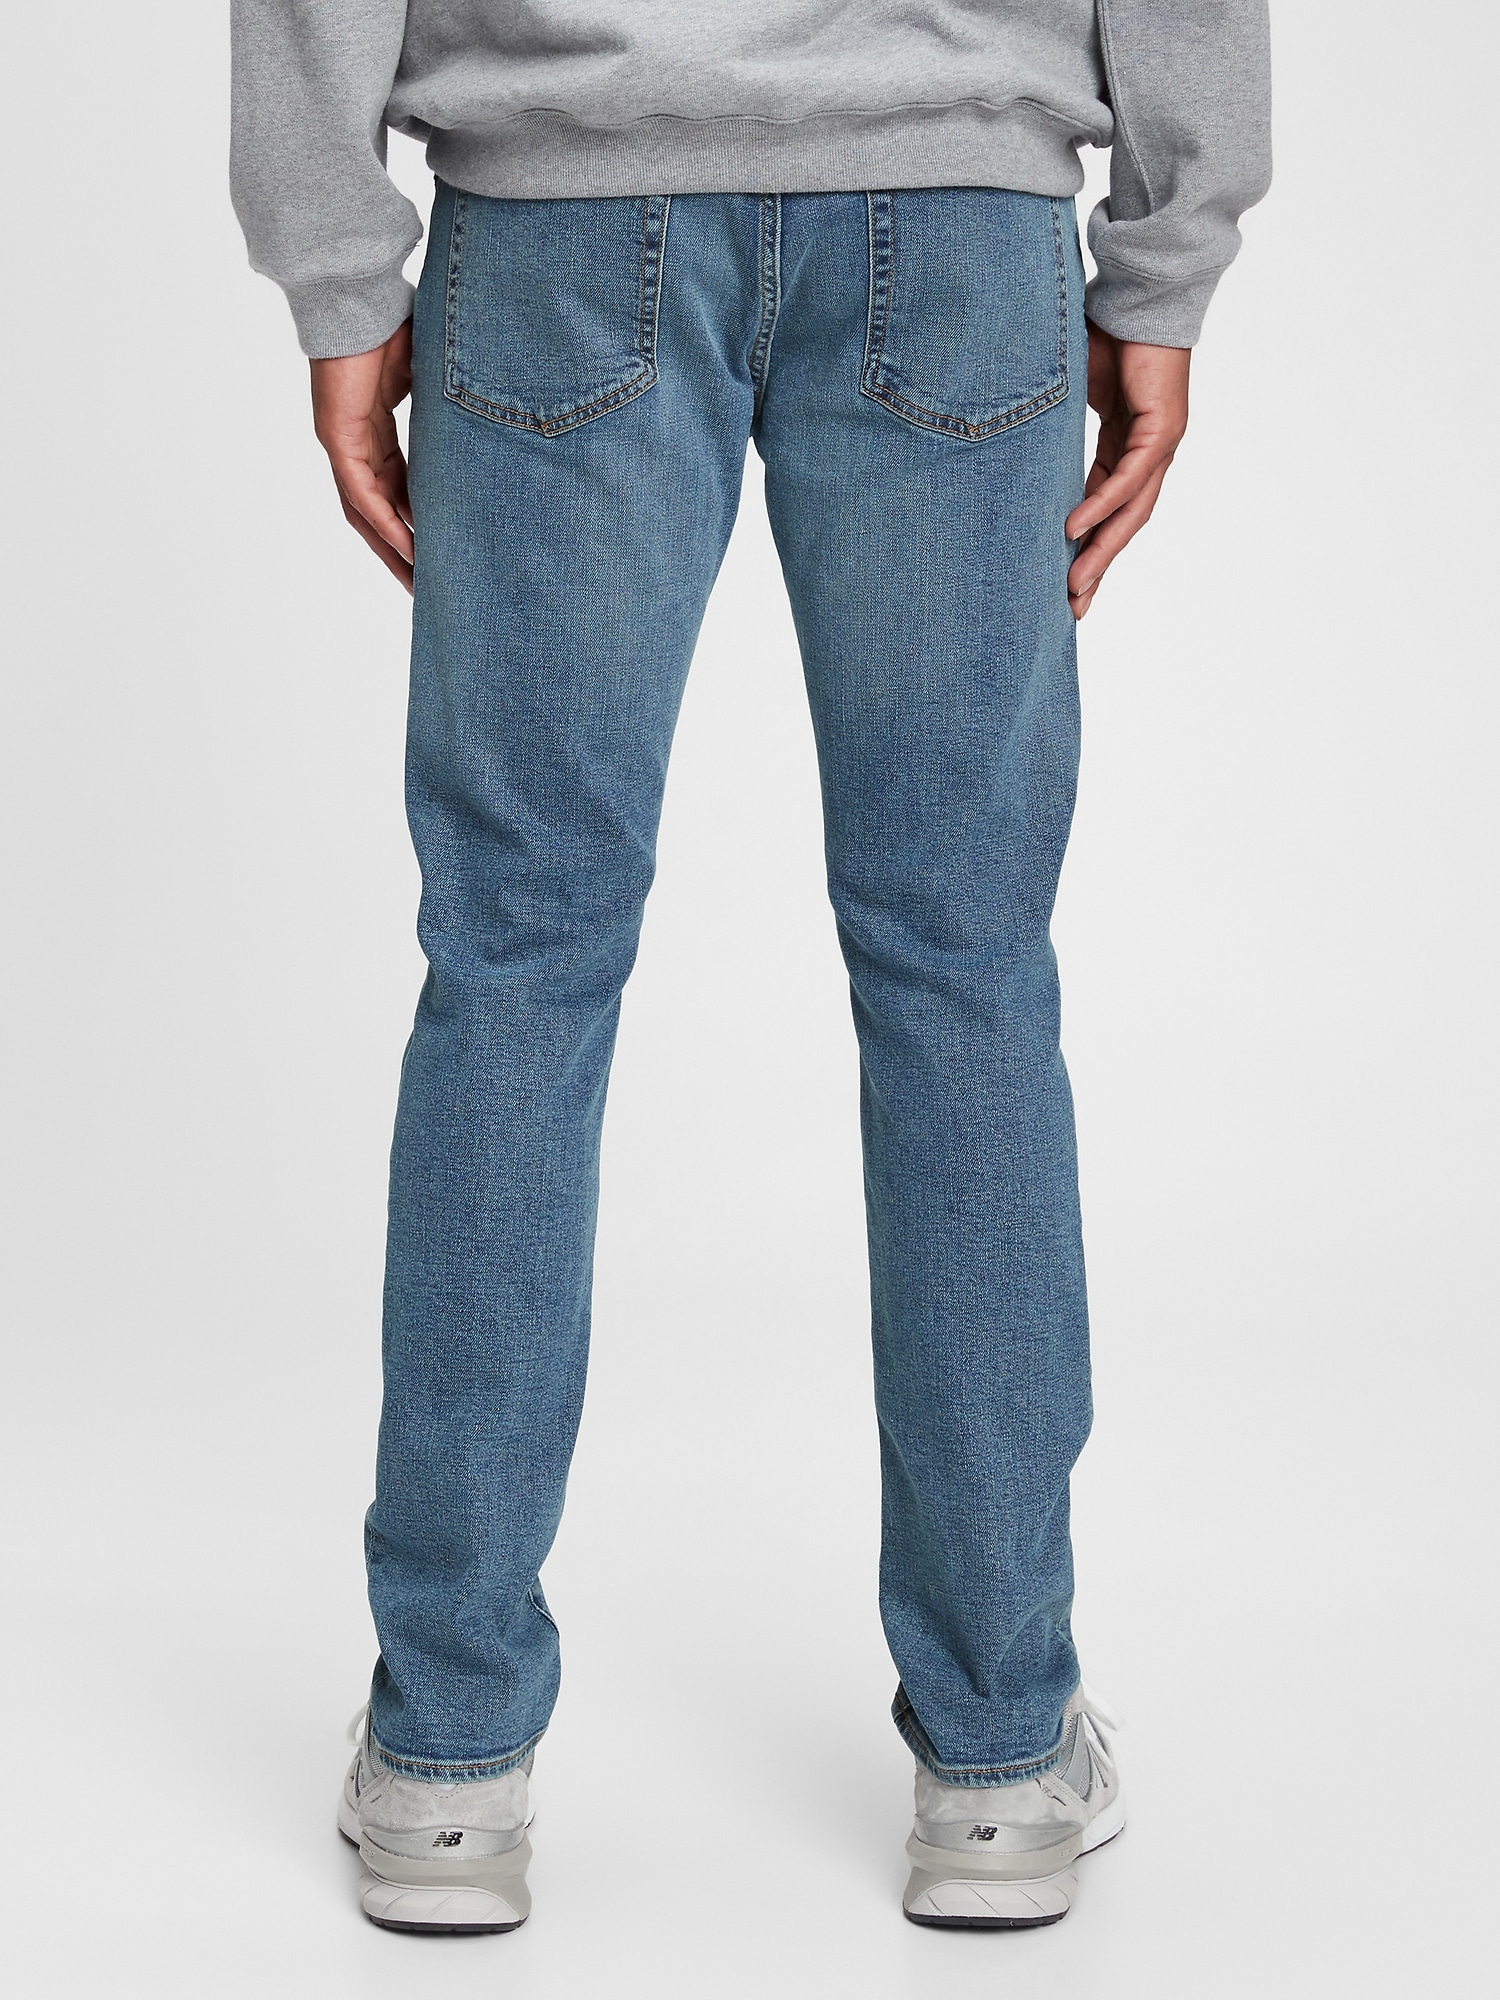 NEW GAP Men's 365TEMP Slim Performance Jeans in GapFlex Light Wash 30/32  NWT